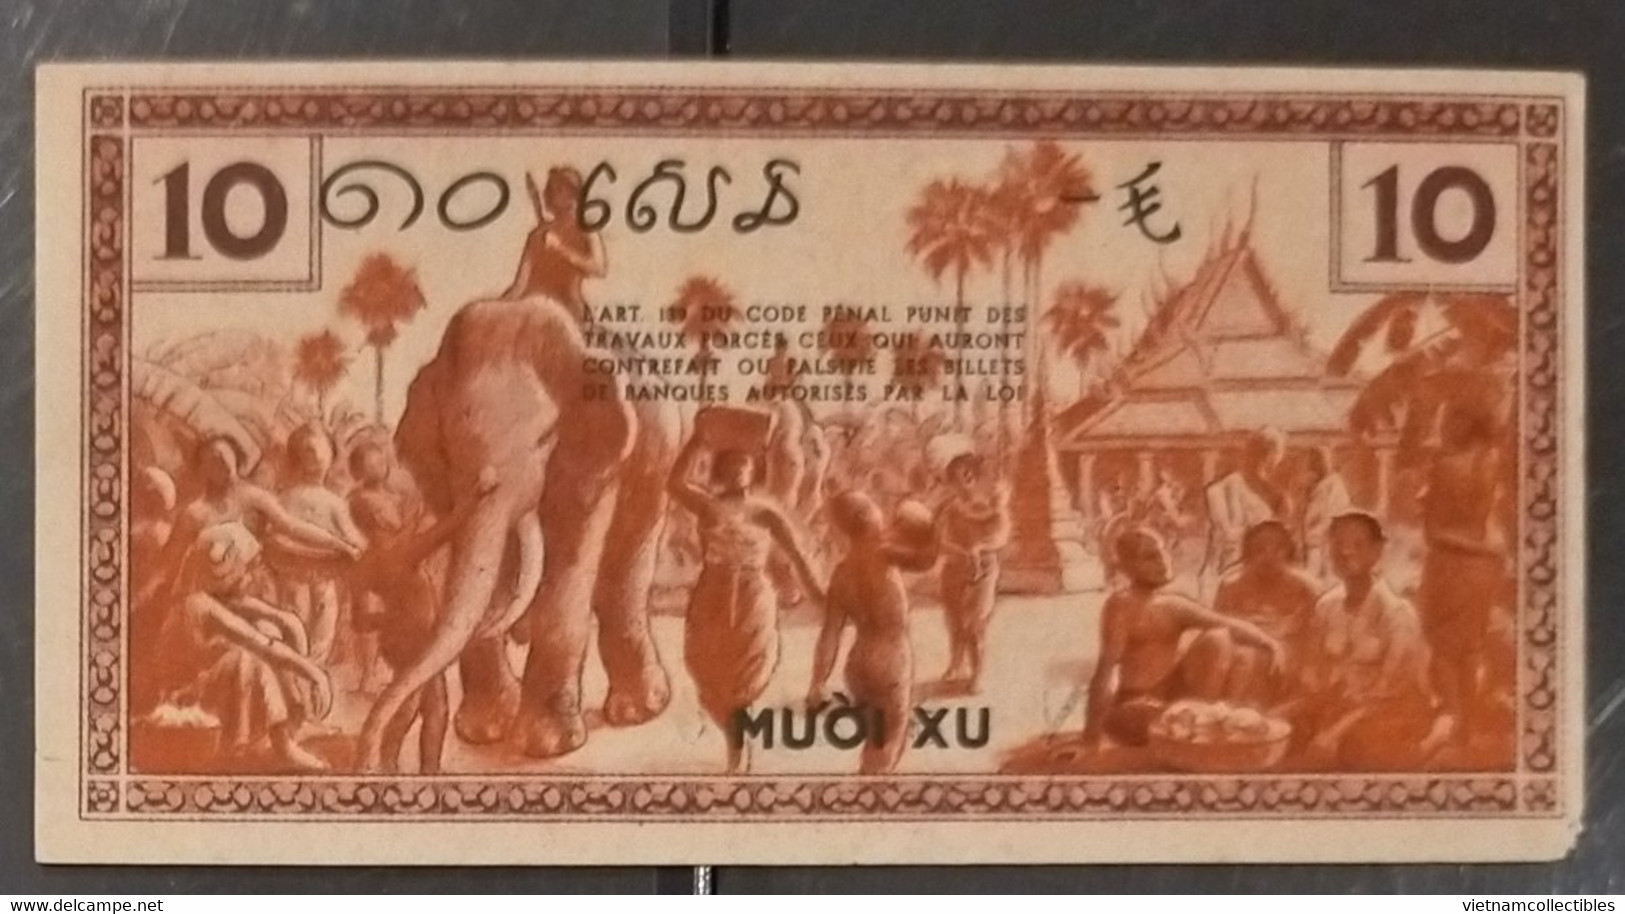 French Indochine Indochina Vietnam Viet Nam Laos Cambodia 10 Cents AU Banknote Note 1939 - Pick # 85a / 02 Photo - Indochina